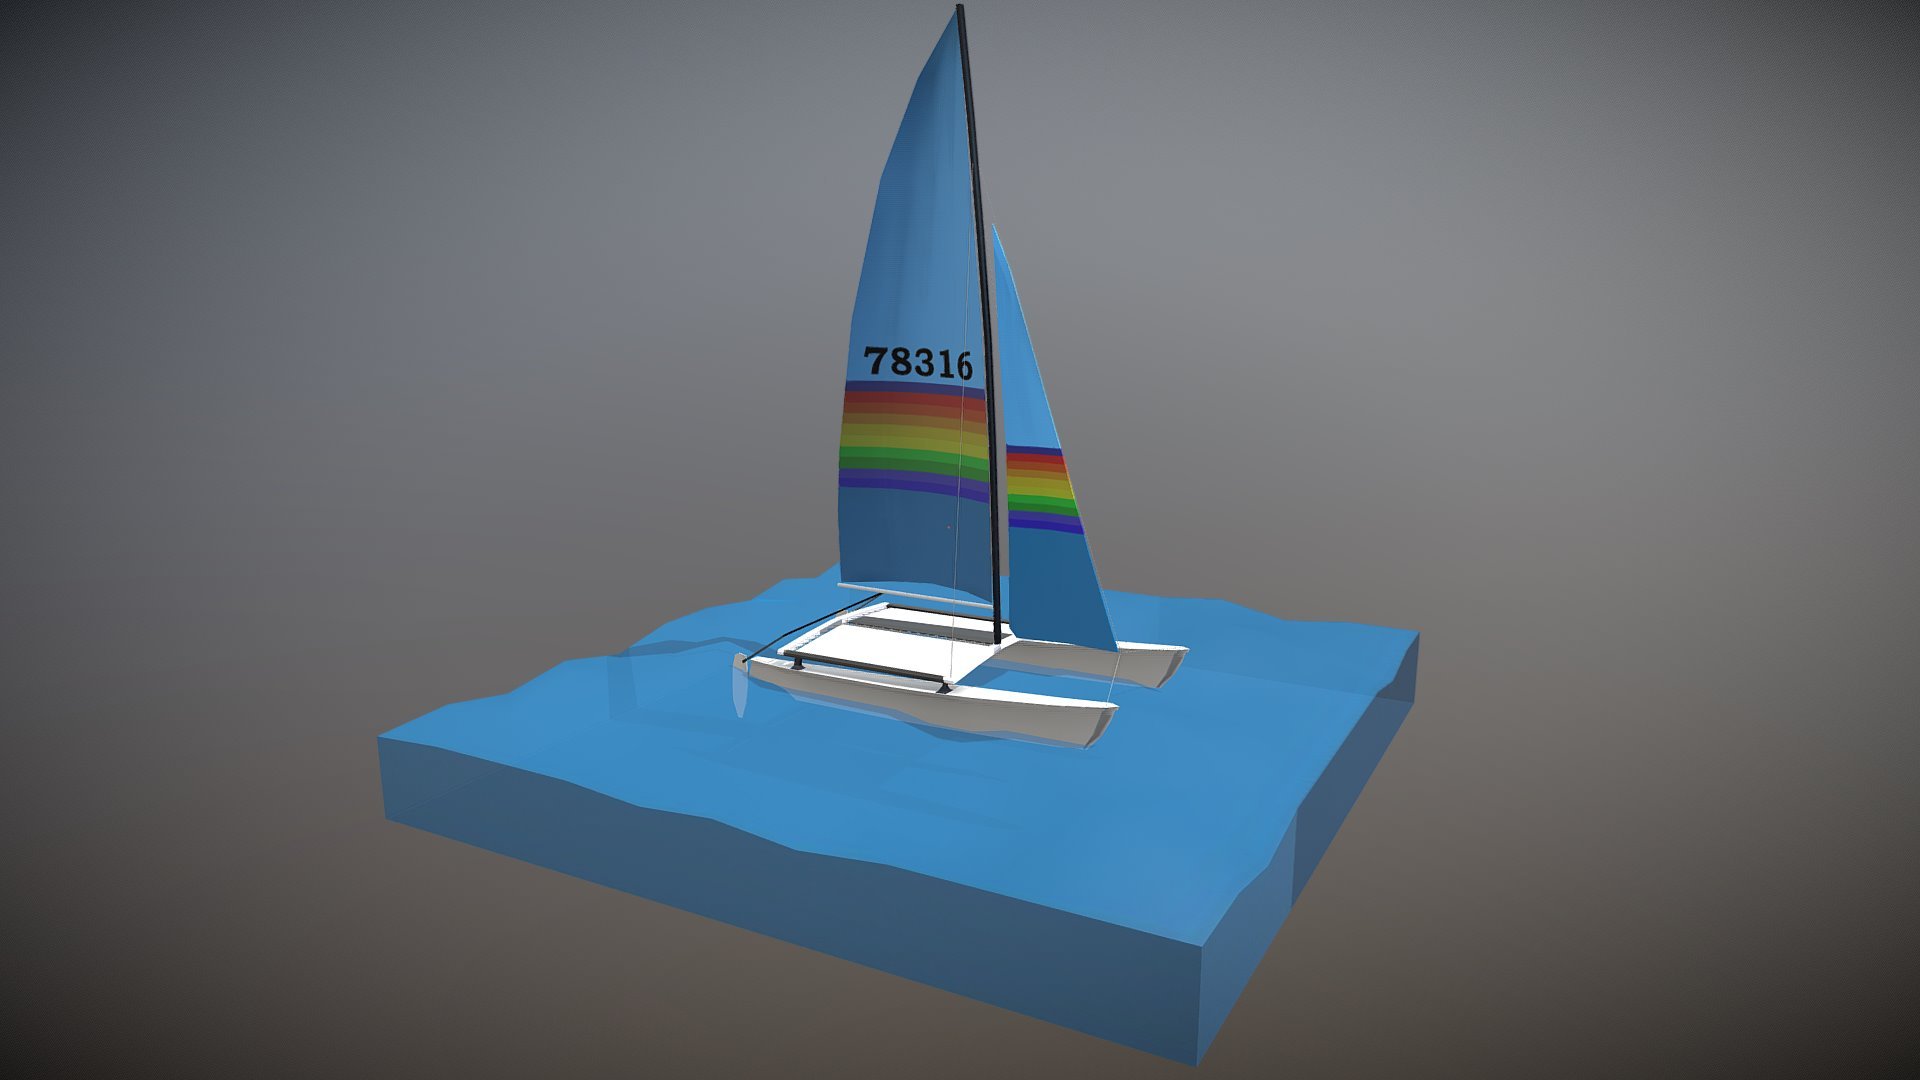 A Hobie Catamaran I created using Maya and Substance Painter - Hobie Cat - Download Free 3D model by jboynton 3d model